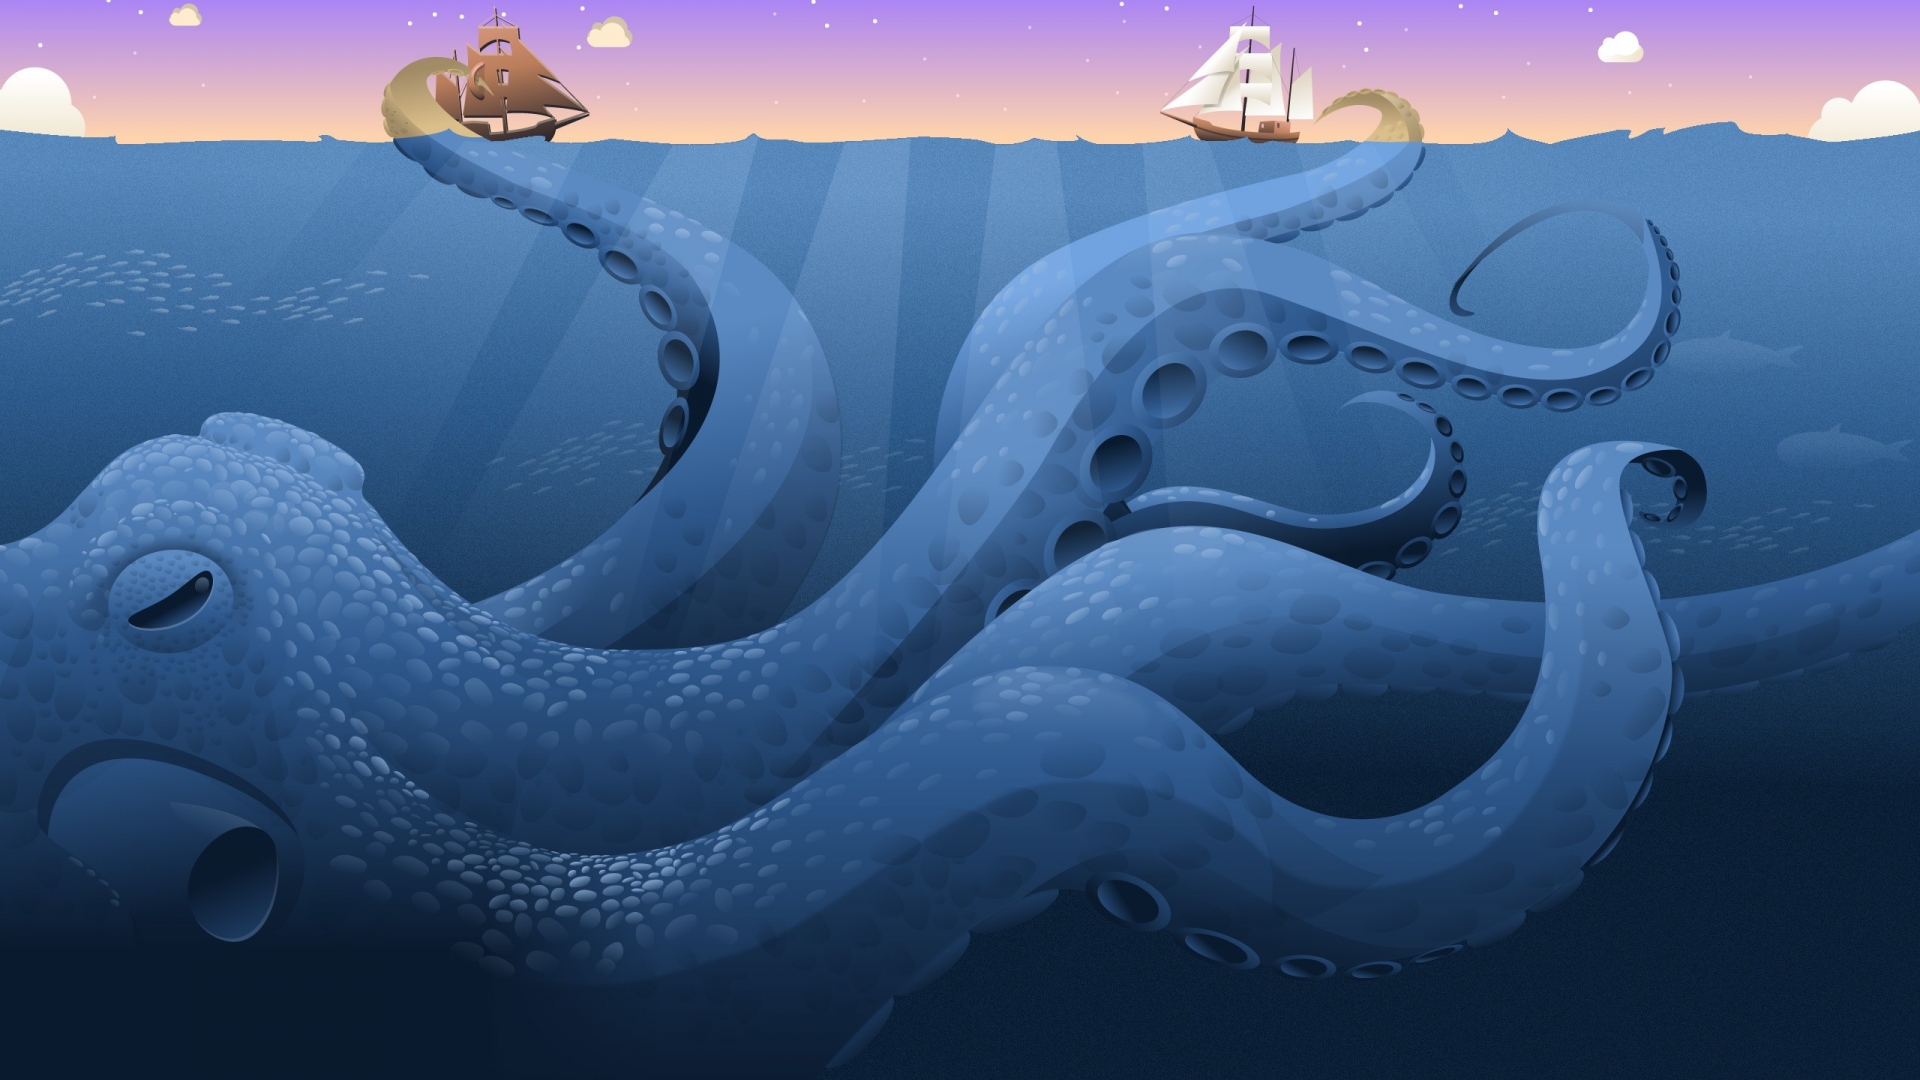 Ships opera web browser norway kraken wallpapers hd desktop and mobile backgrounds